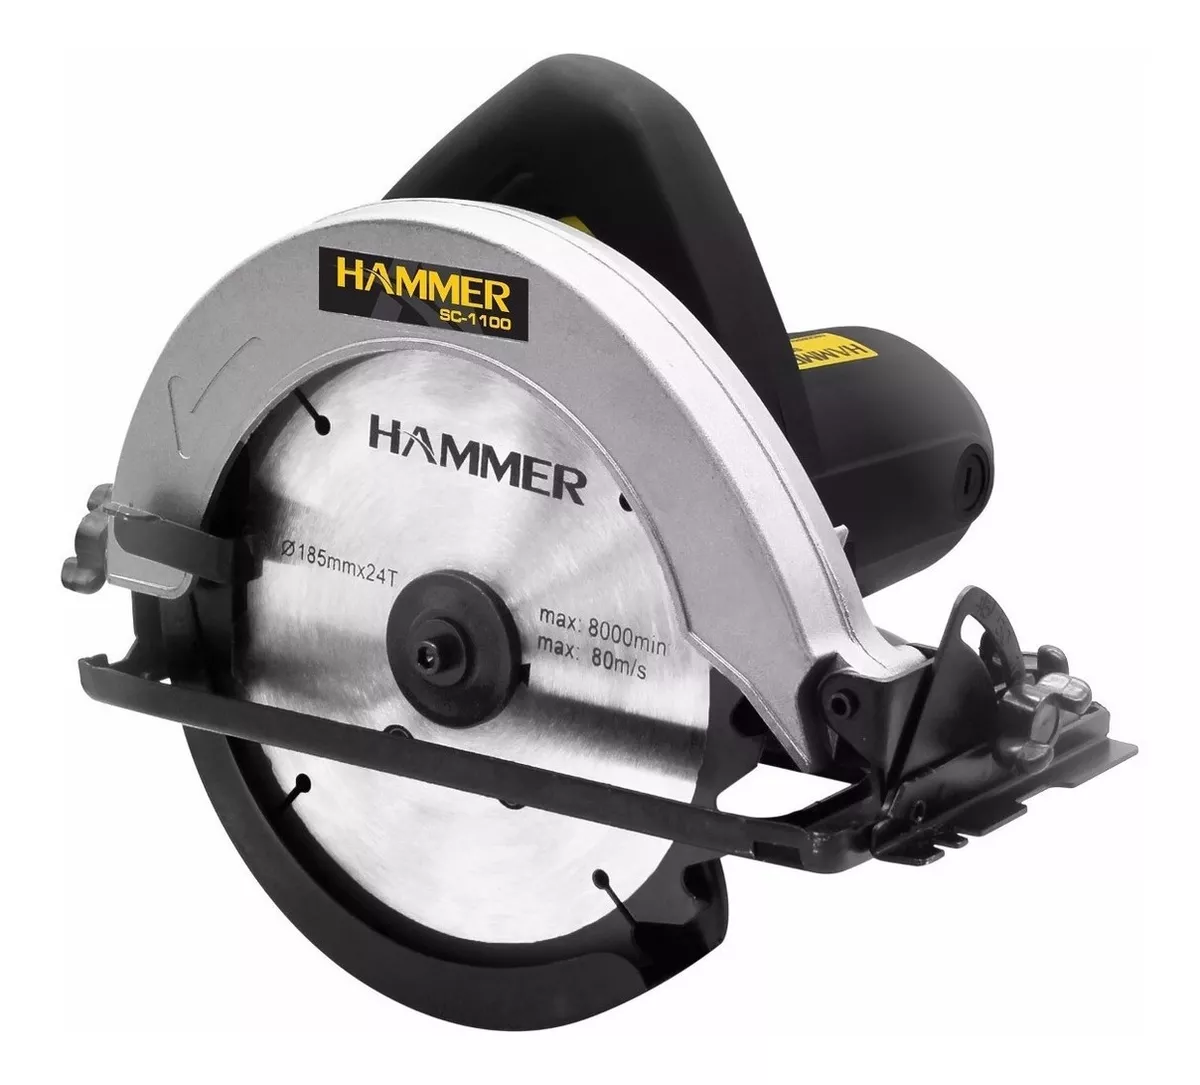 Serra Circular Elétrica Hammer Sc1100 185mm 1100w Preta 220v